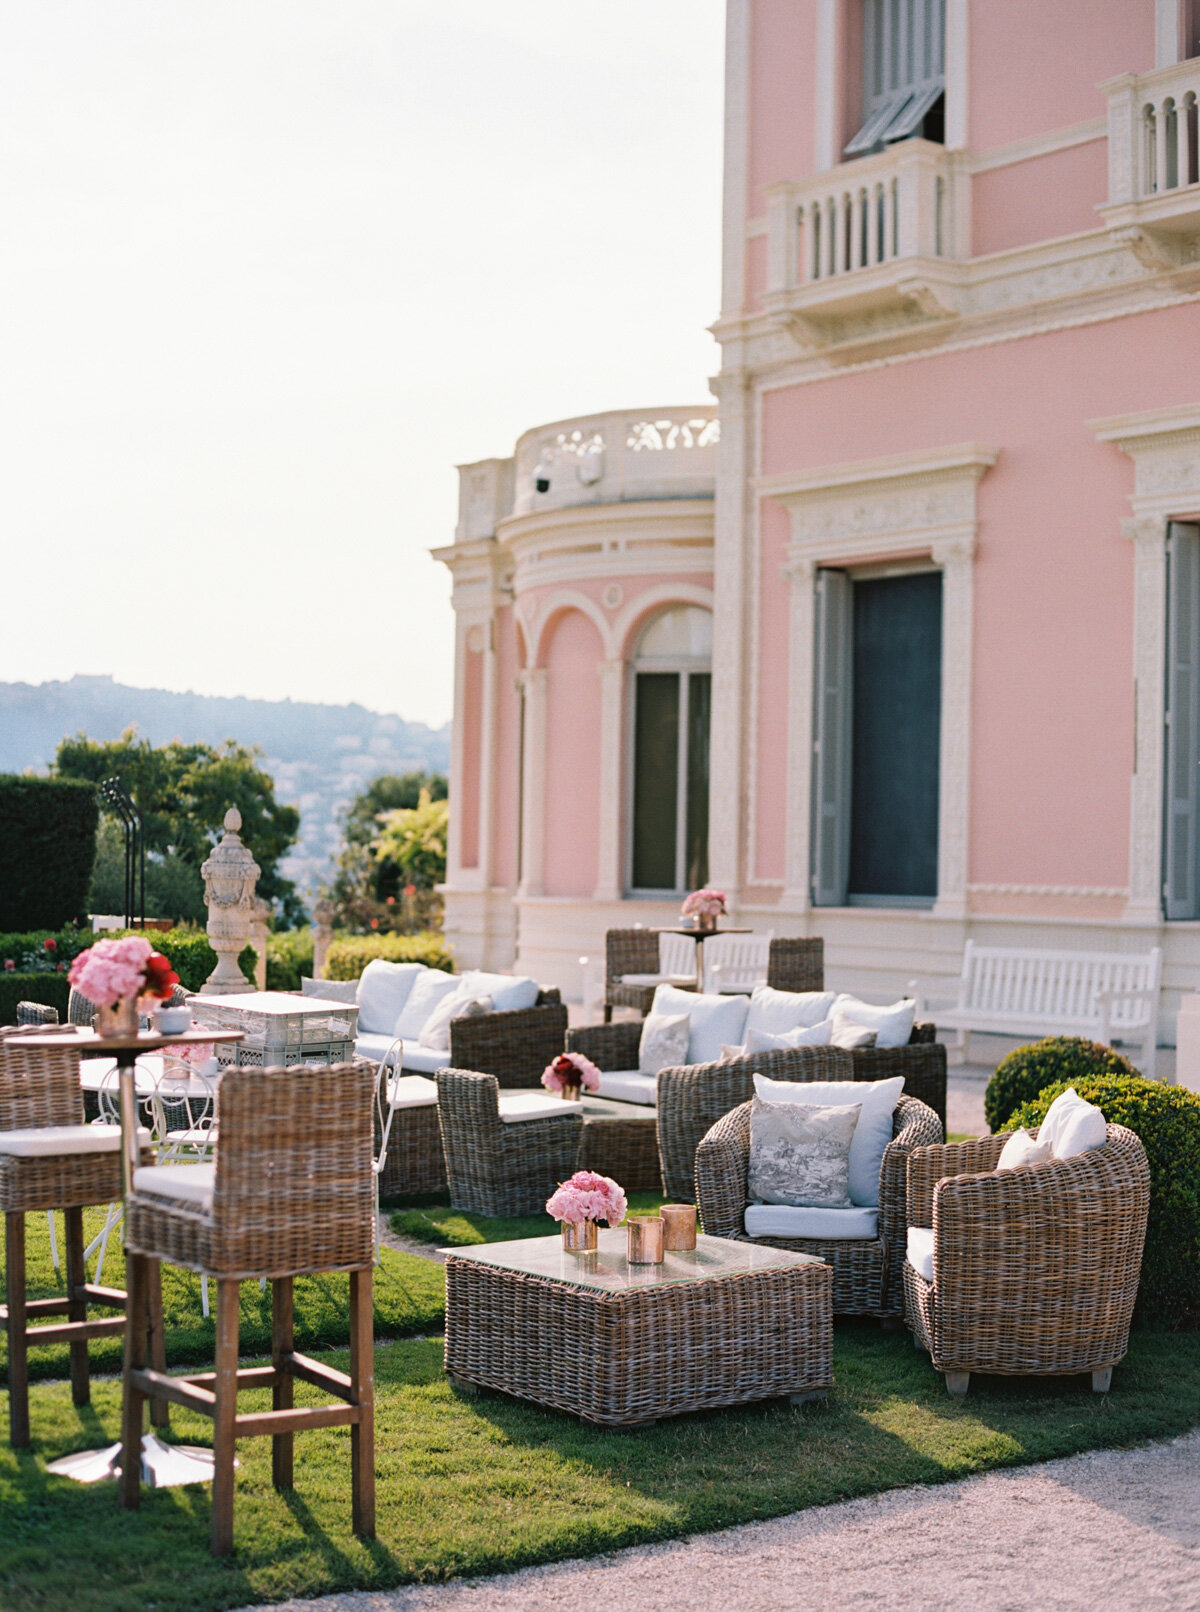 Villa-Ephrussi-de-Rothschild-Monaco-Nice-Saint Tropez-Welcome-Dinner-Katie-Grant-destination-wedding (10 of 37).jpg